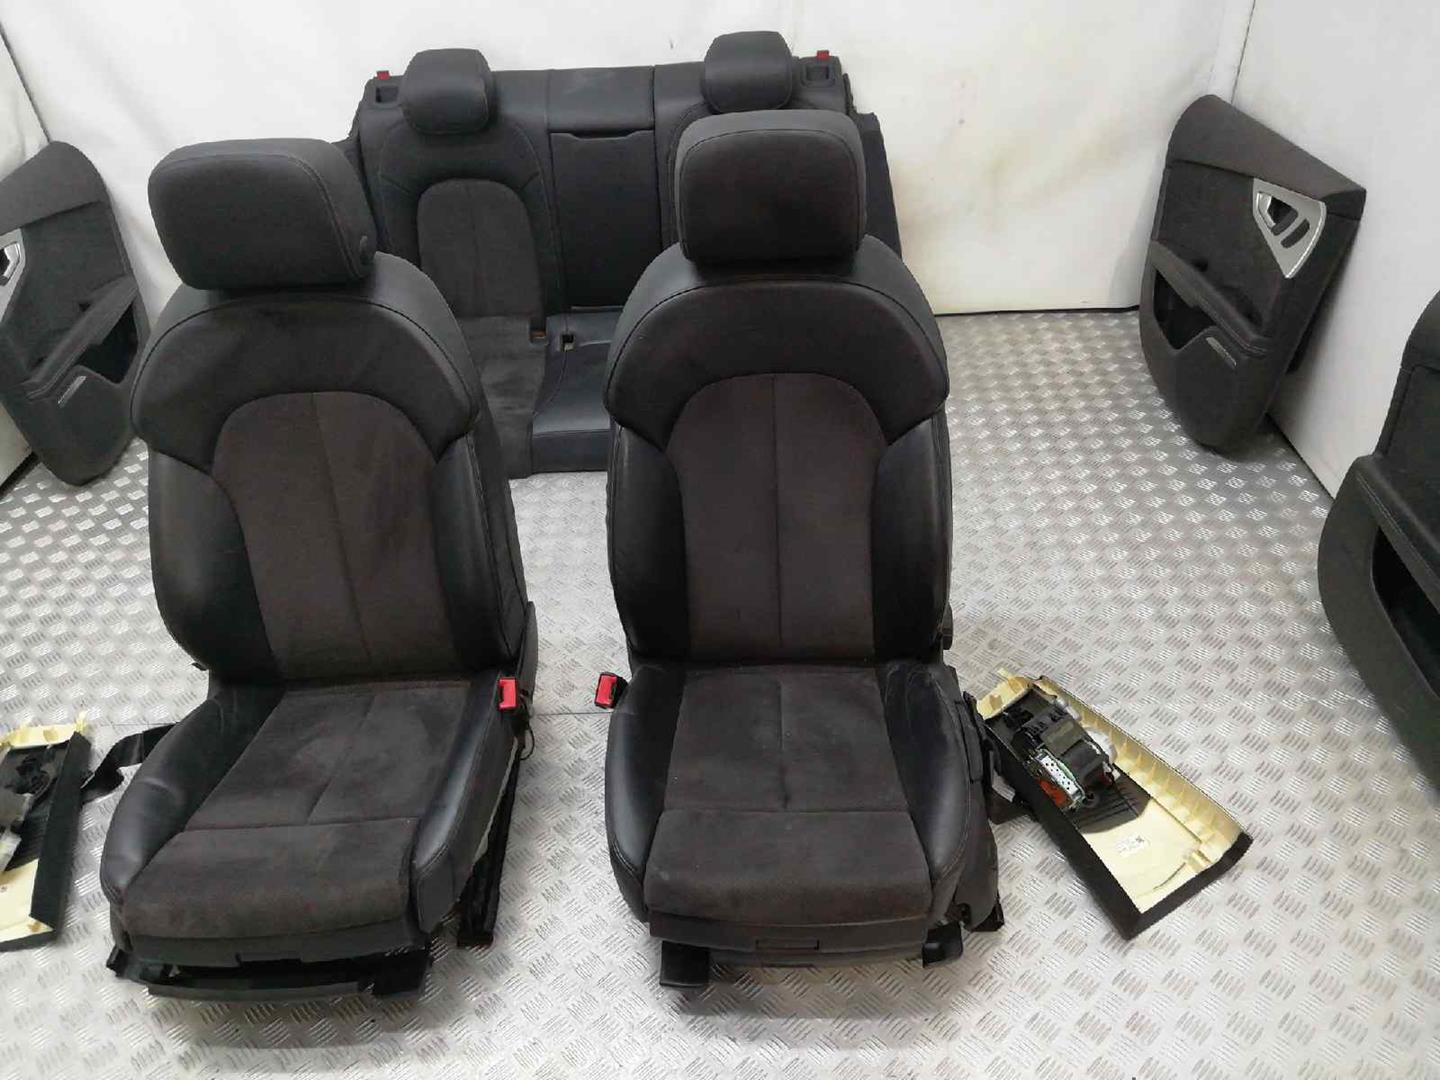 AUDI A7 C7/4G (2010-2020) Seats ASIENTOSMANUALES, CONPANELES 23778194